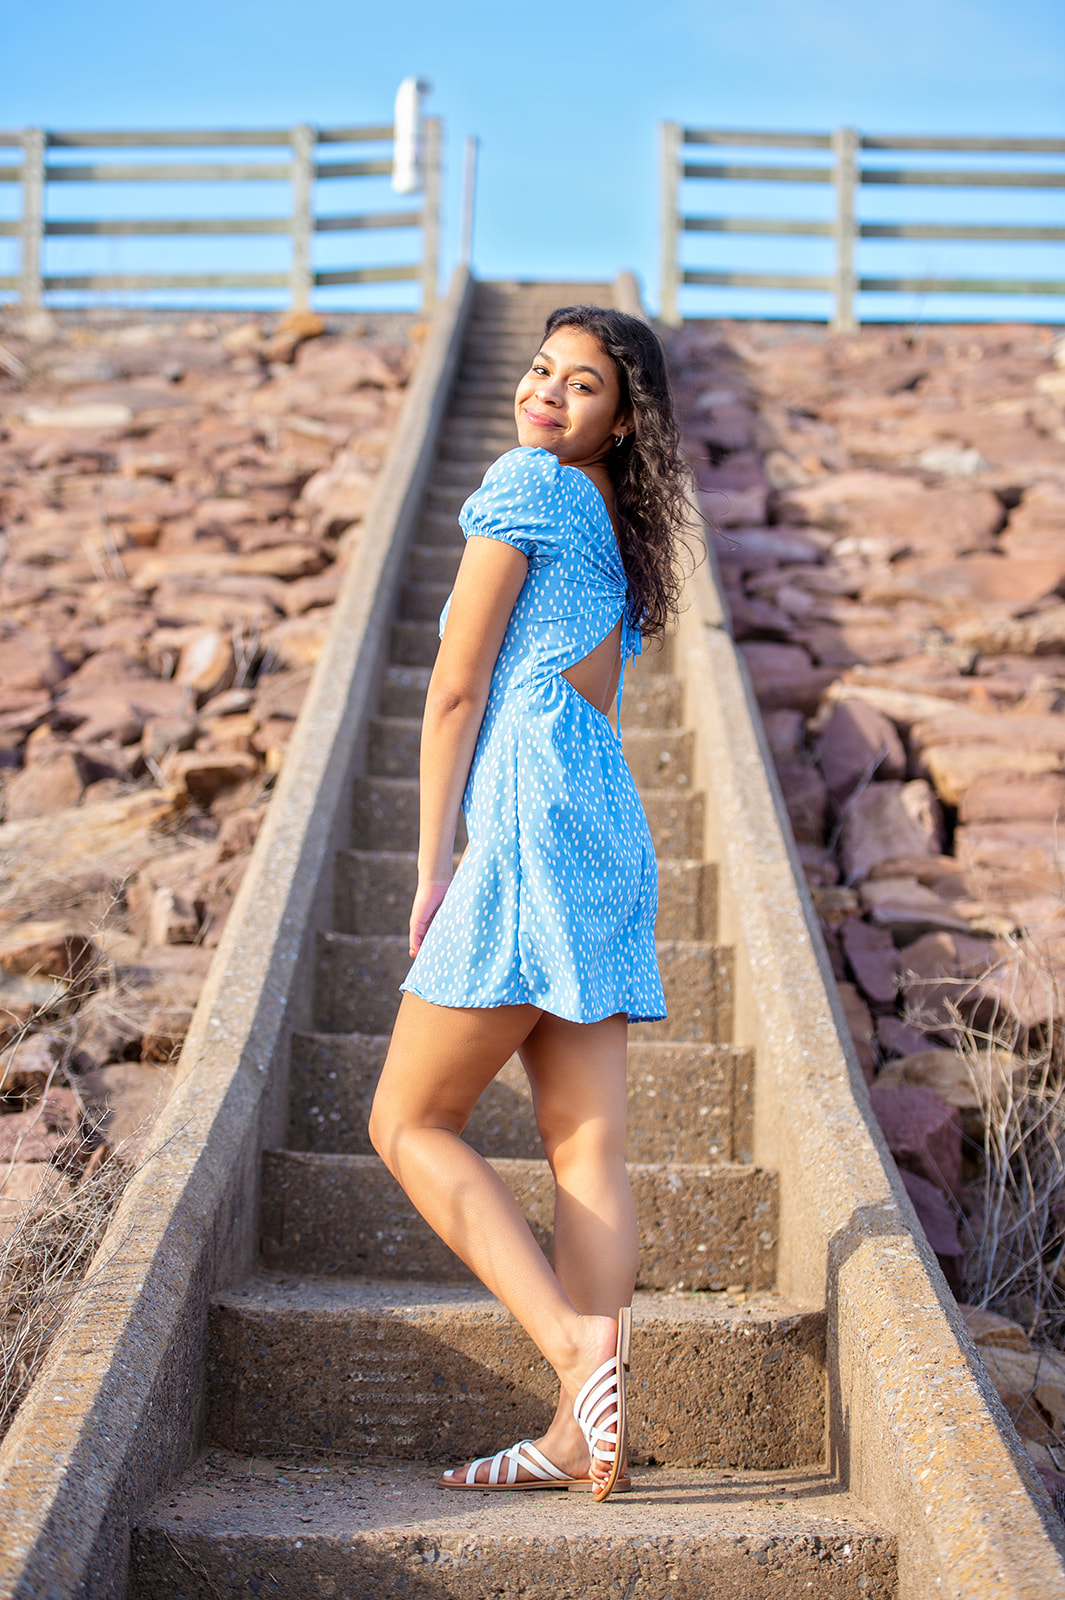 High school senior girl photos in blue dress on steps Susquehanna River. 